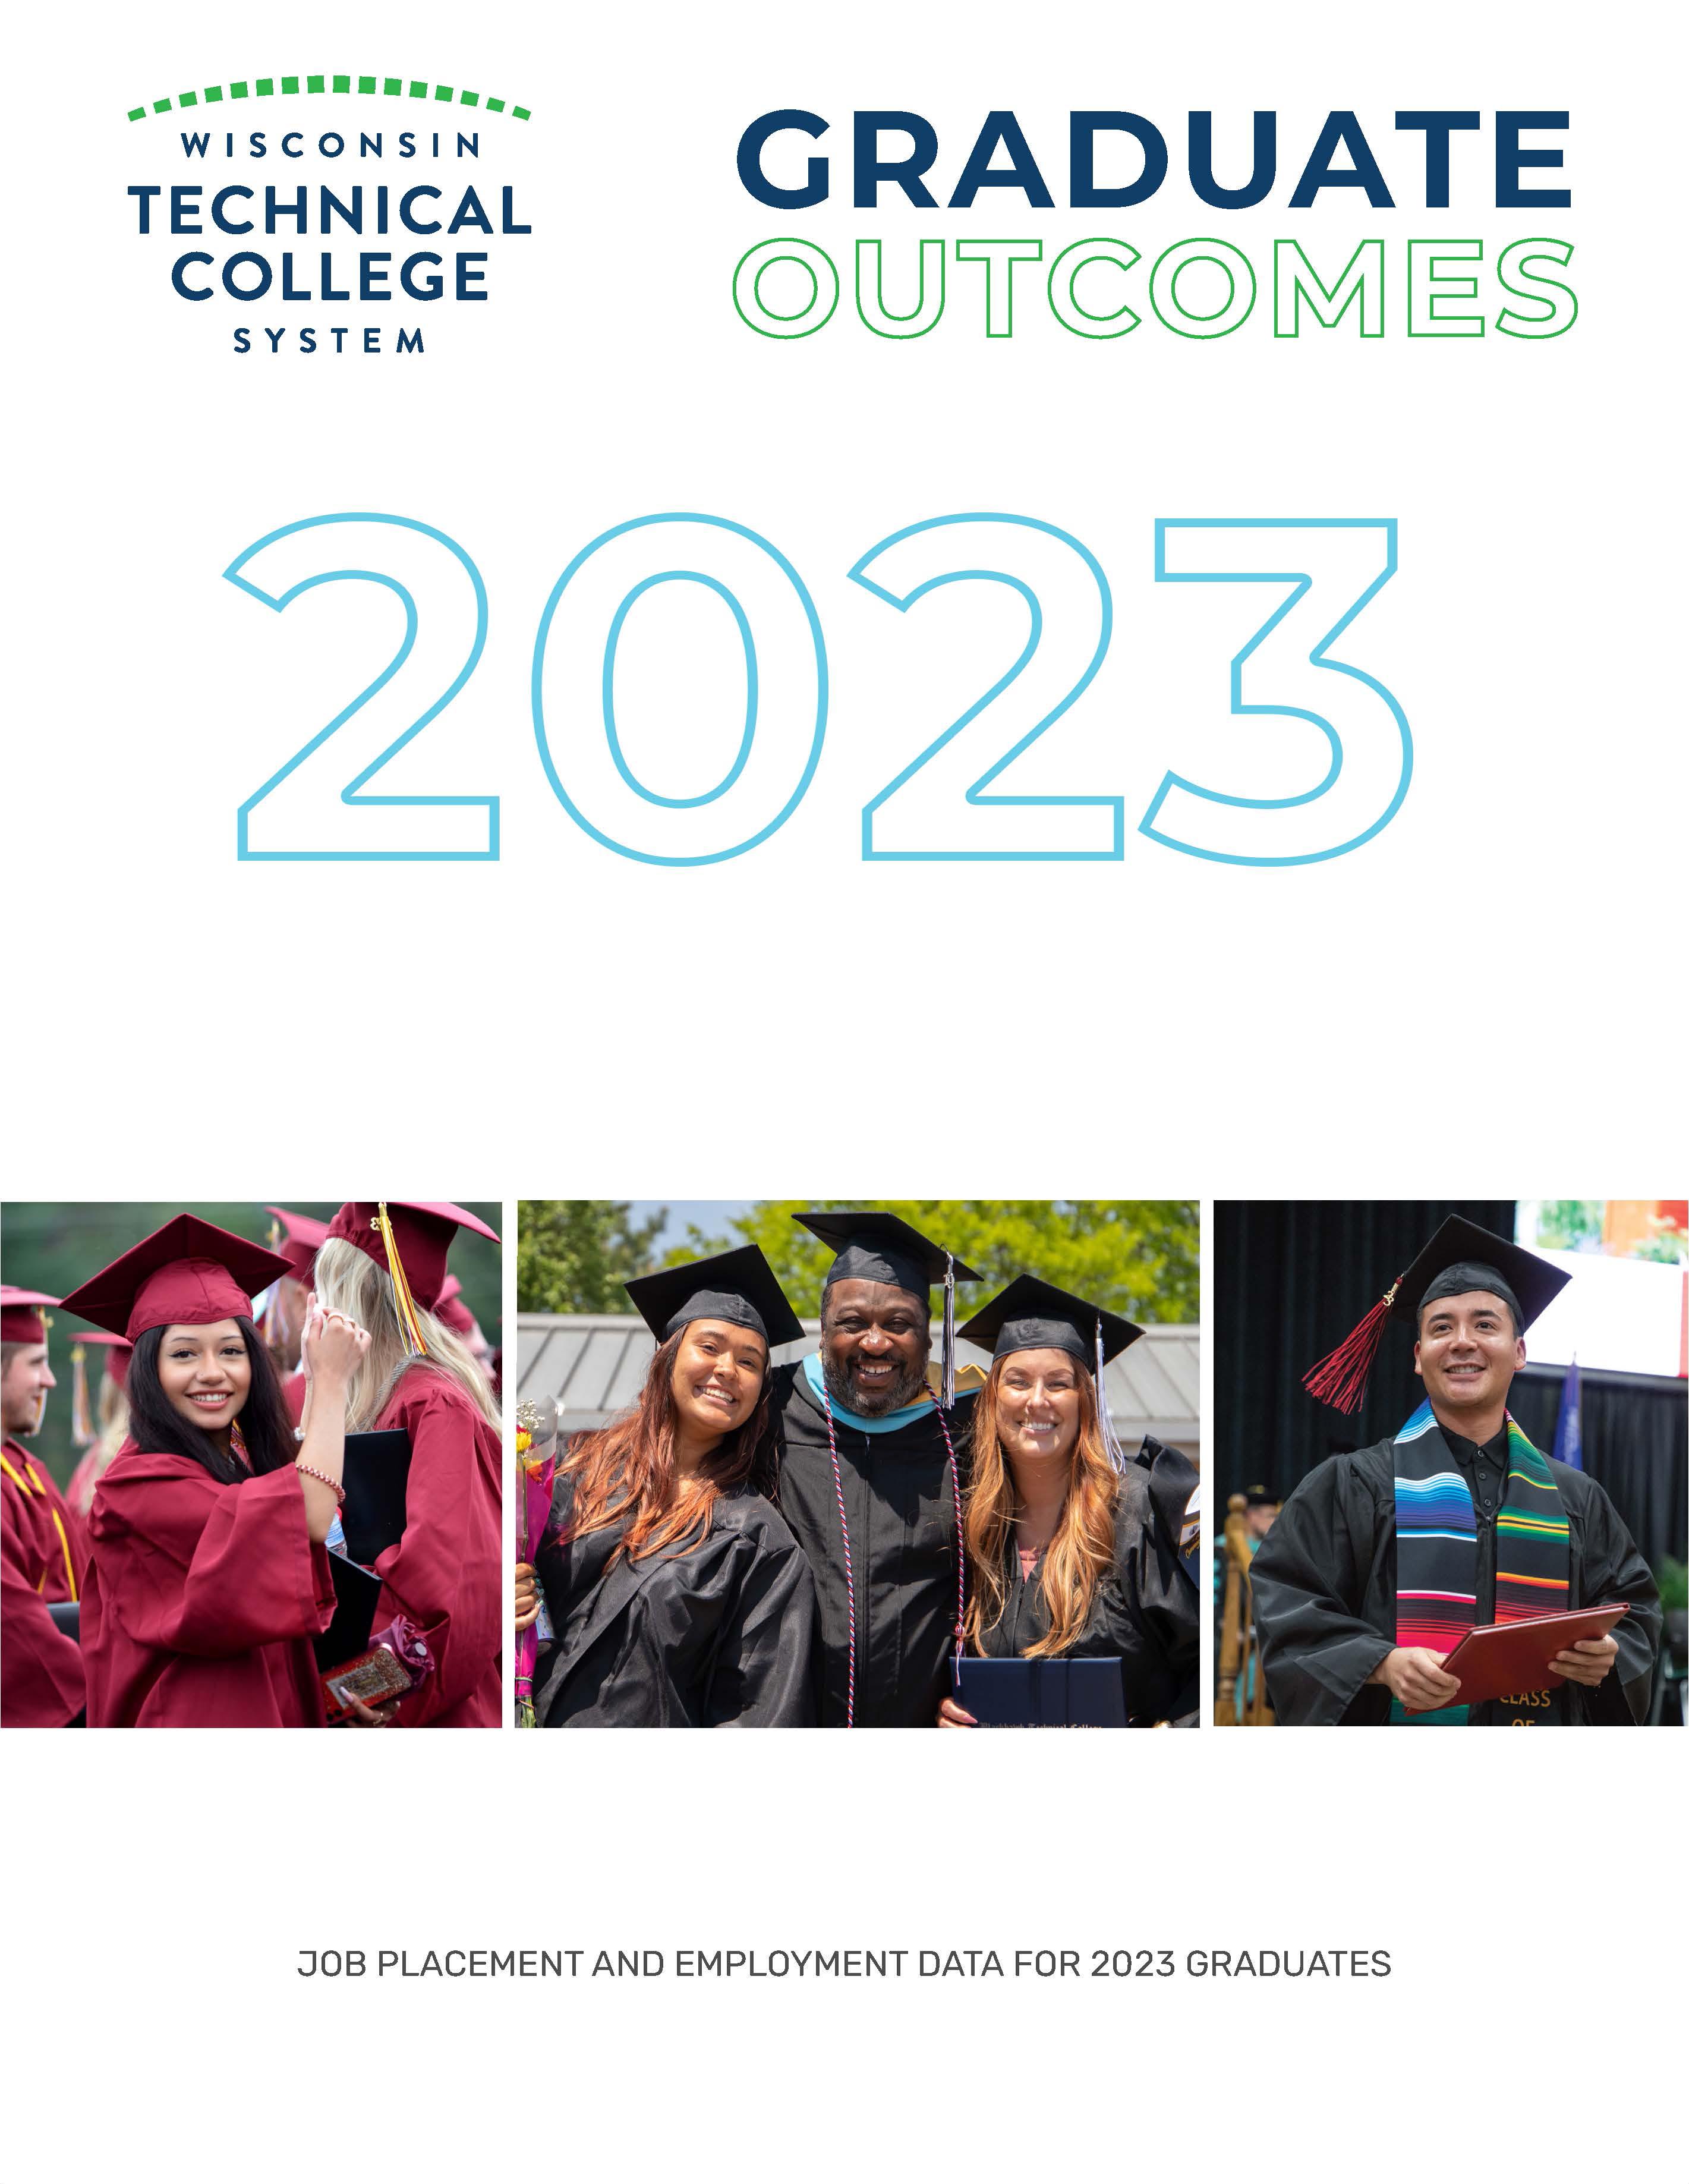 Graduate Outcomes Publication Cover Image